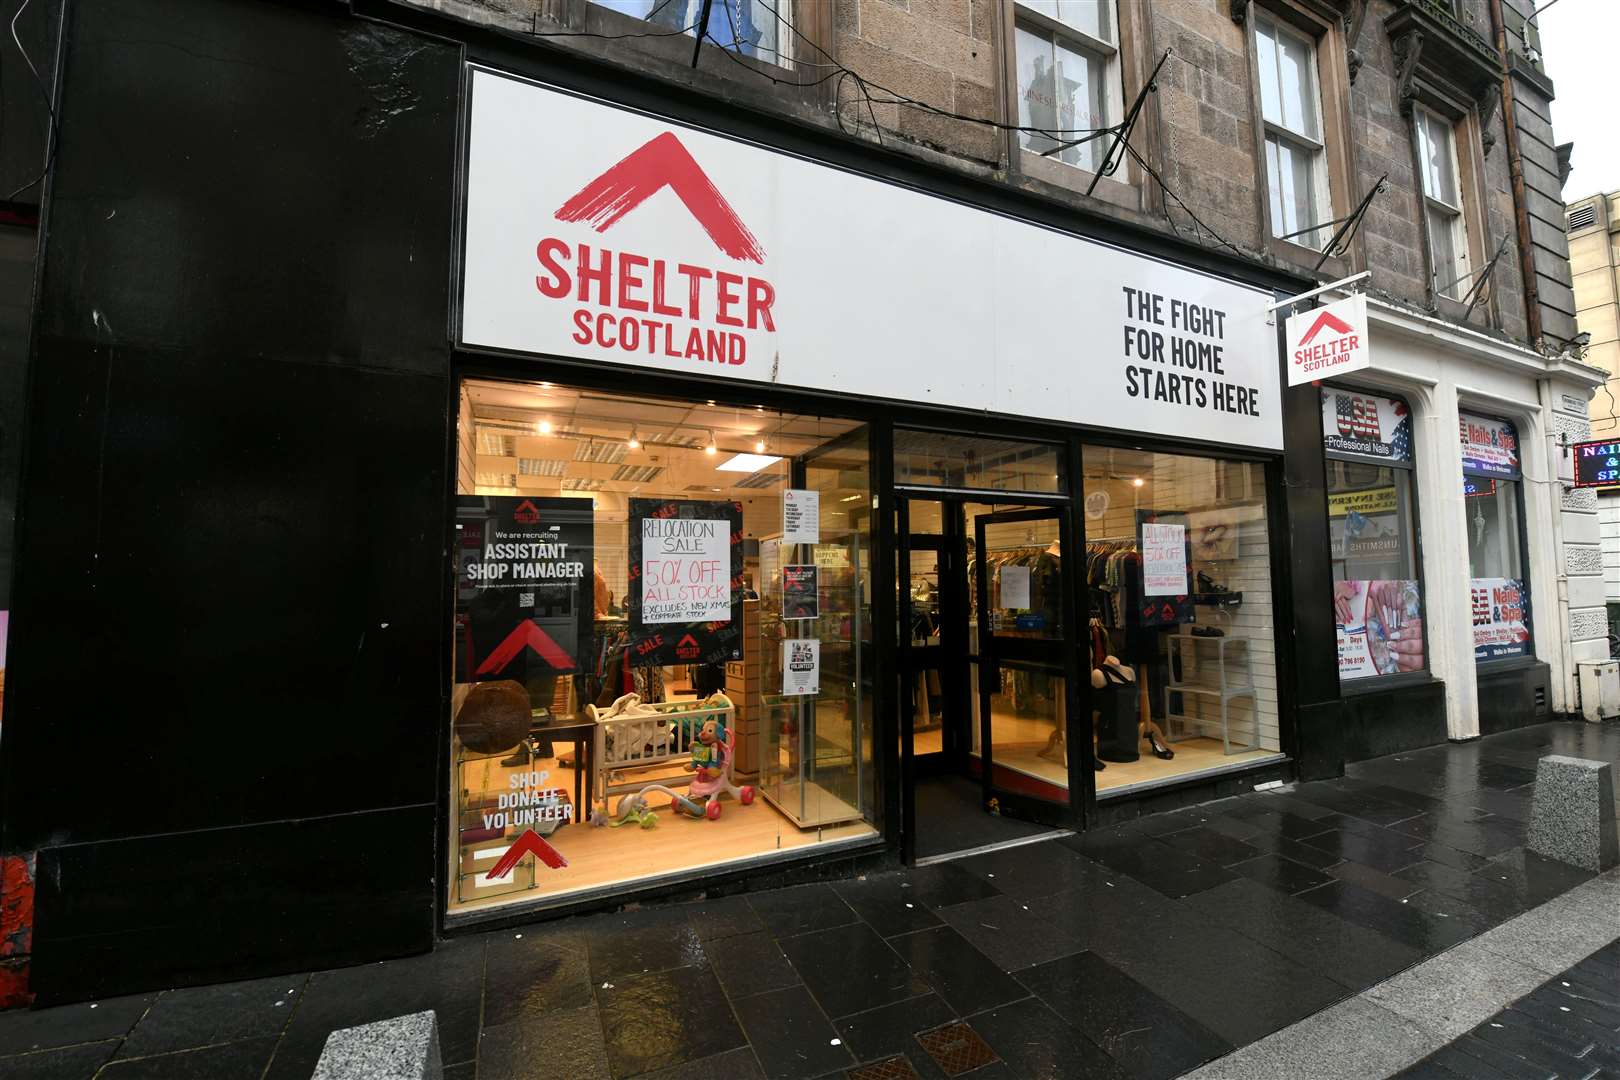 Present location of Shelter Scotland in Drummond Street.